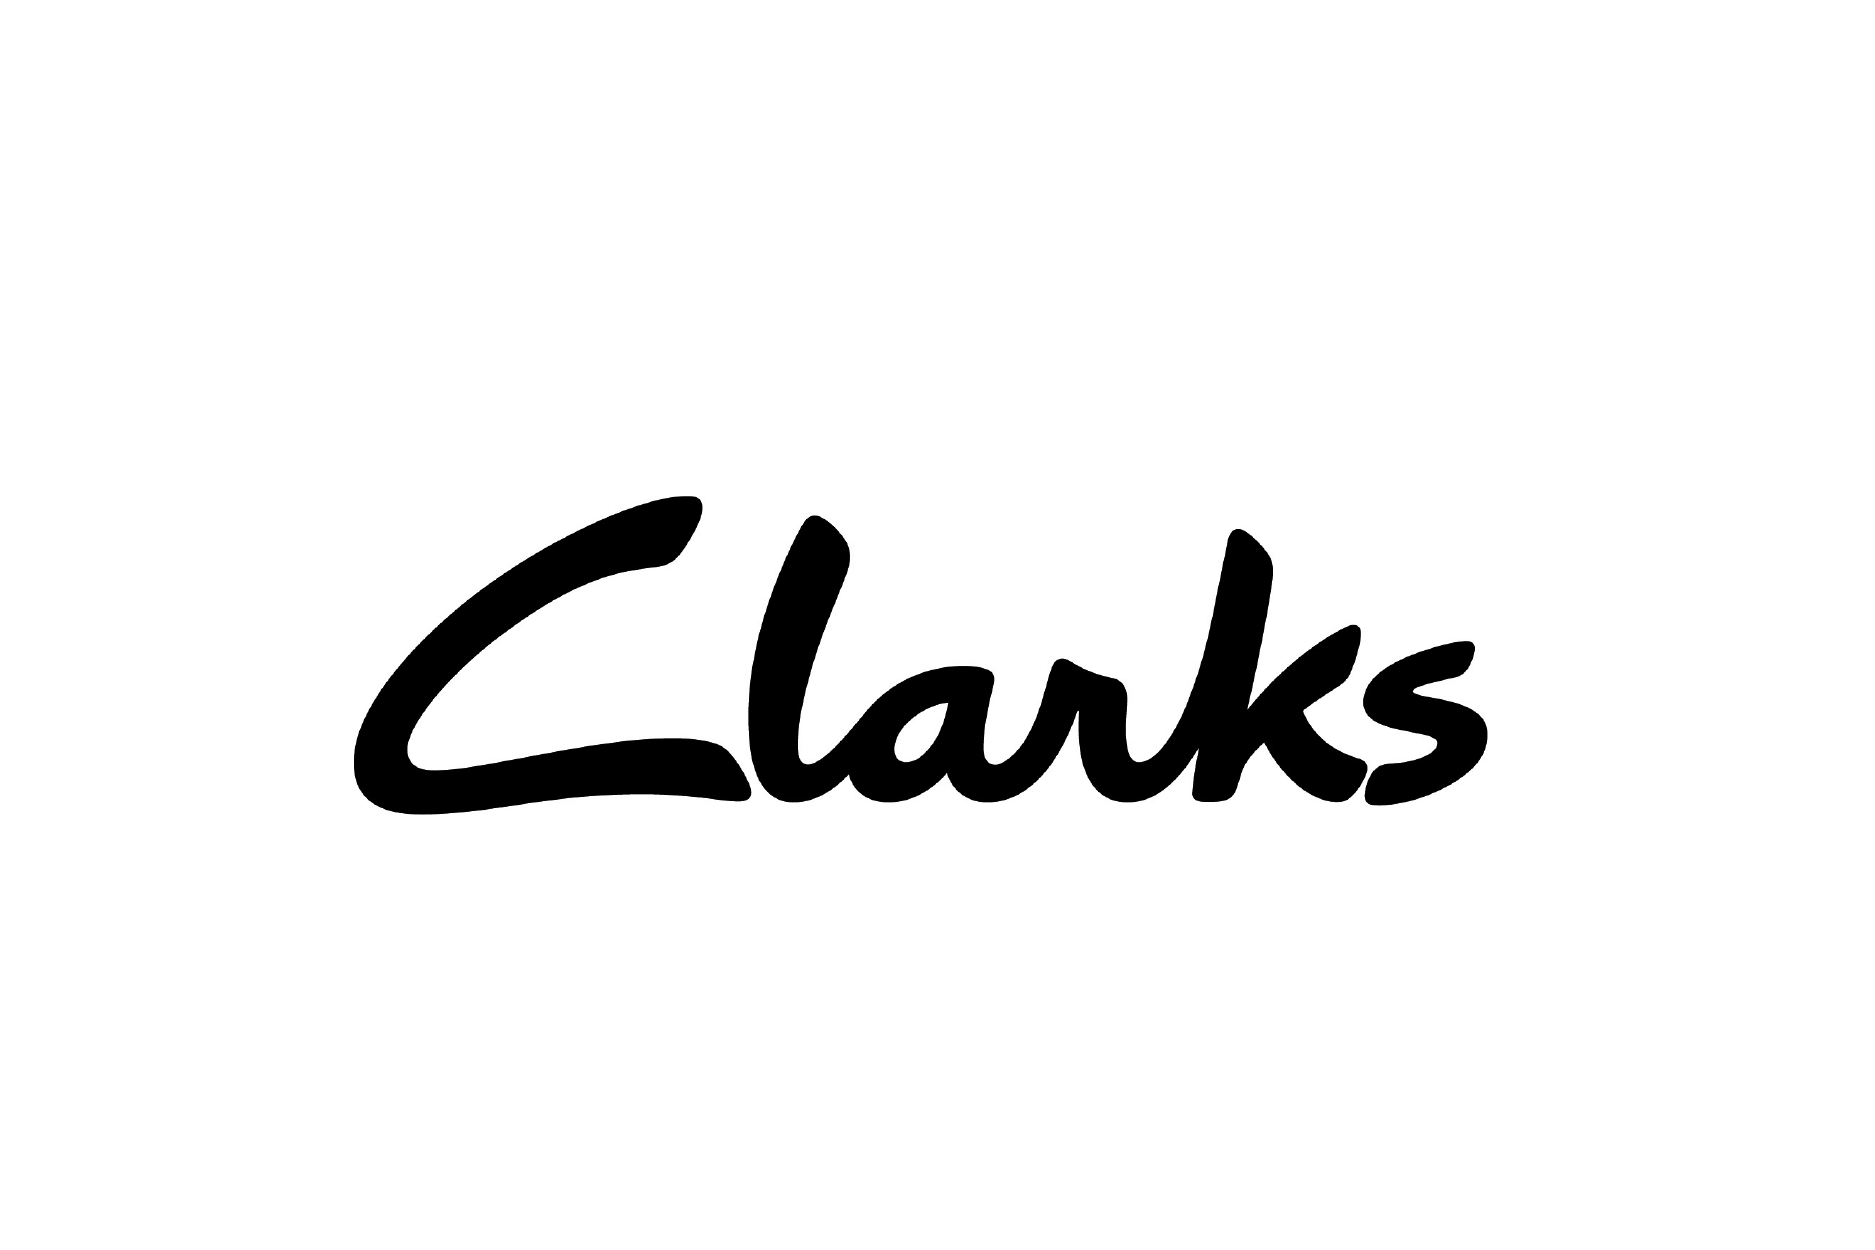 clarks logo png